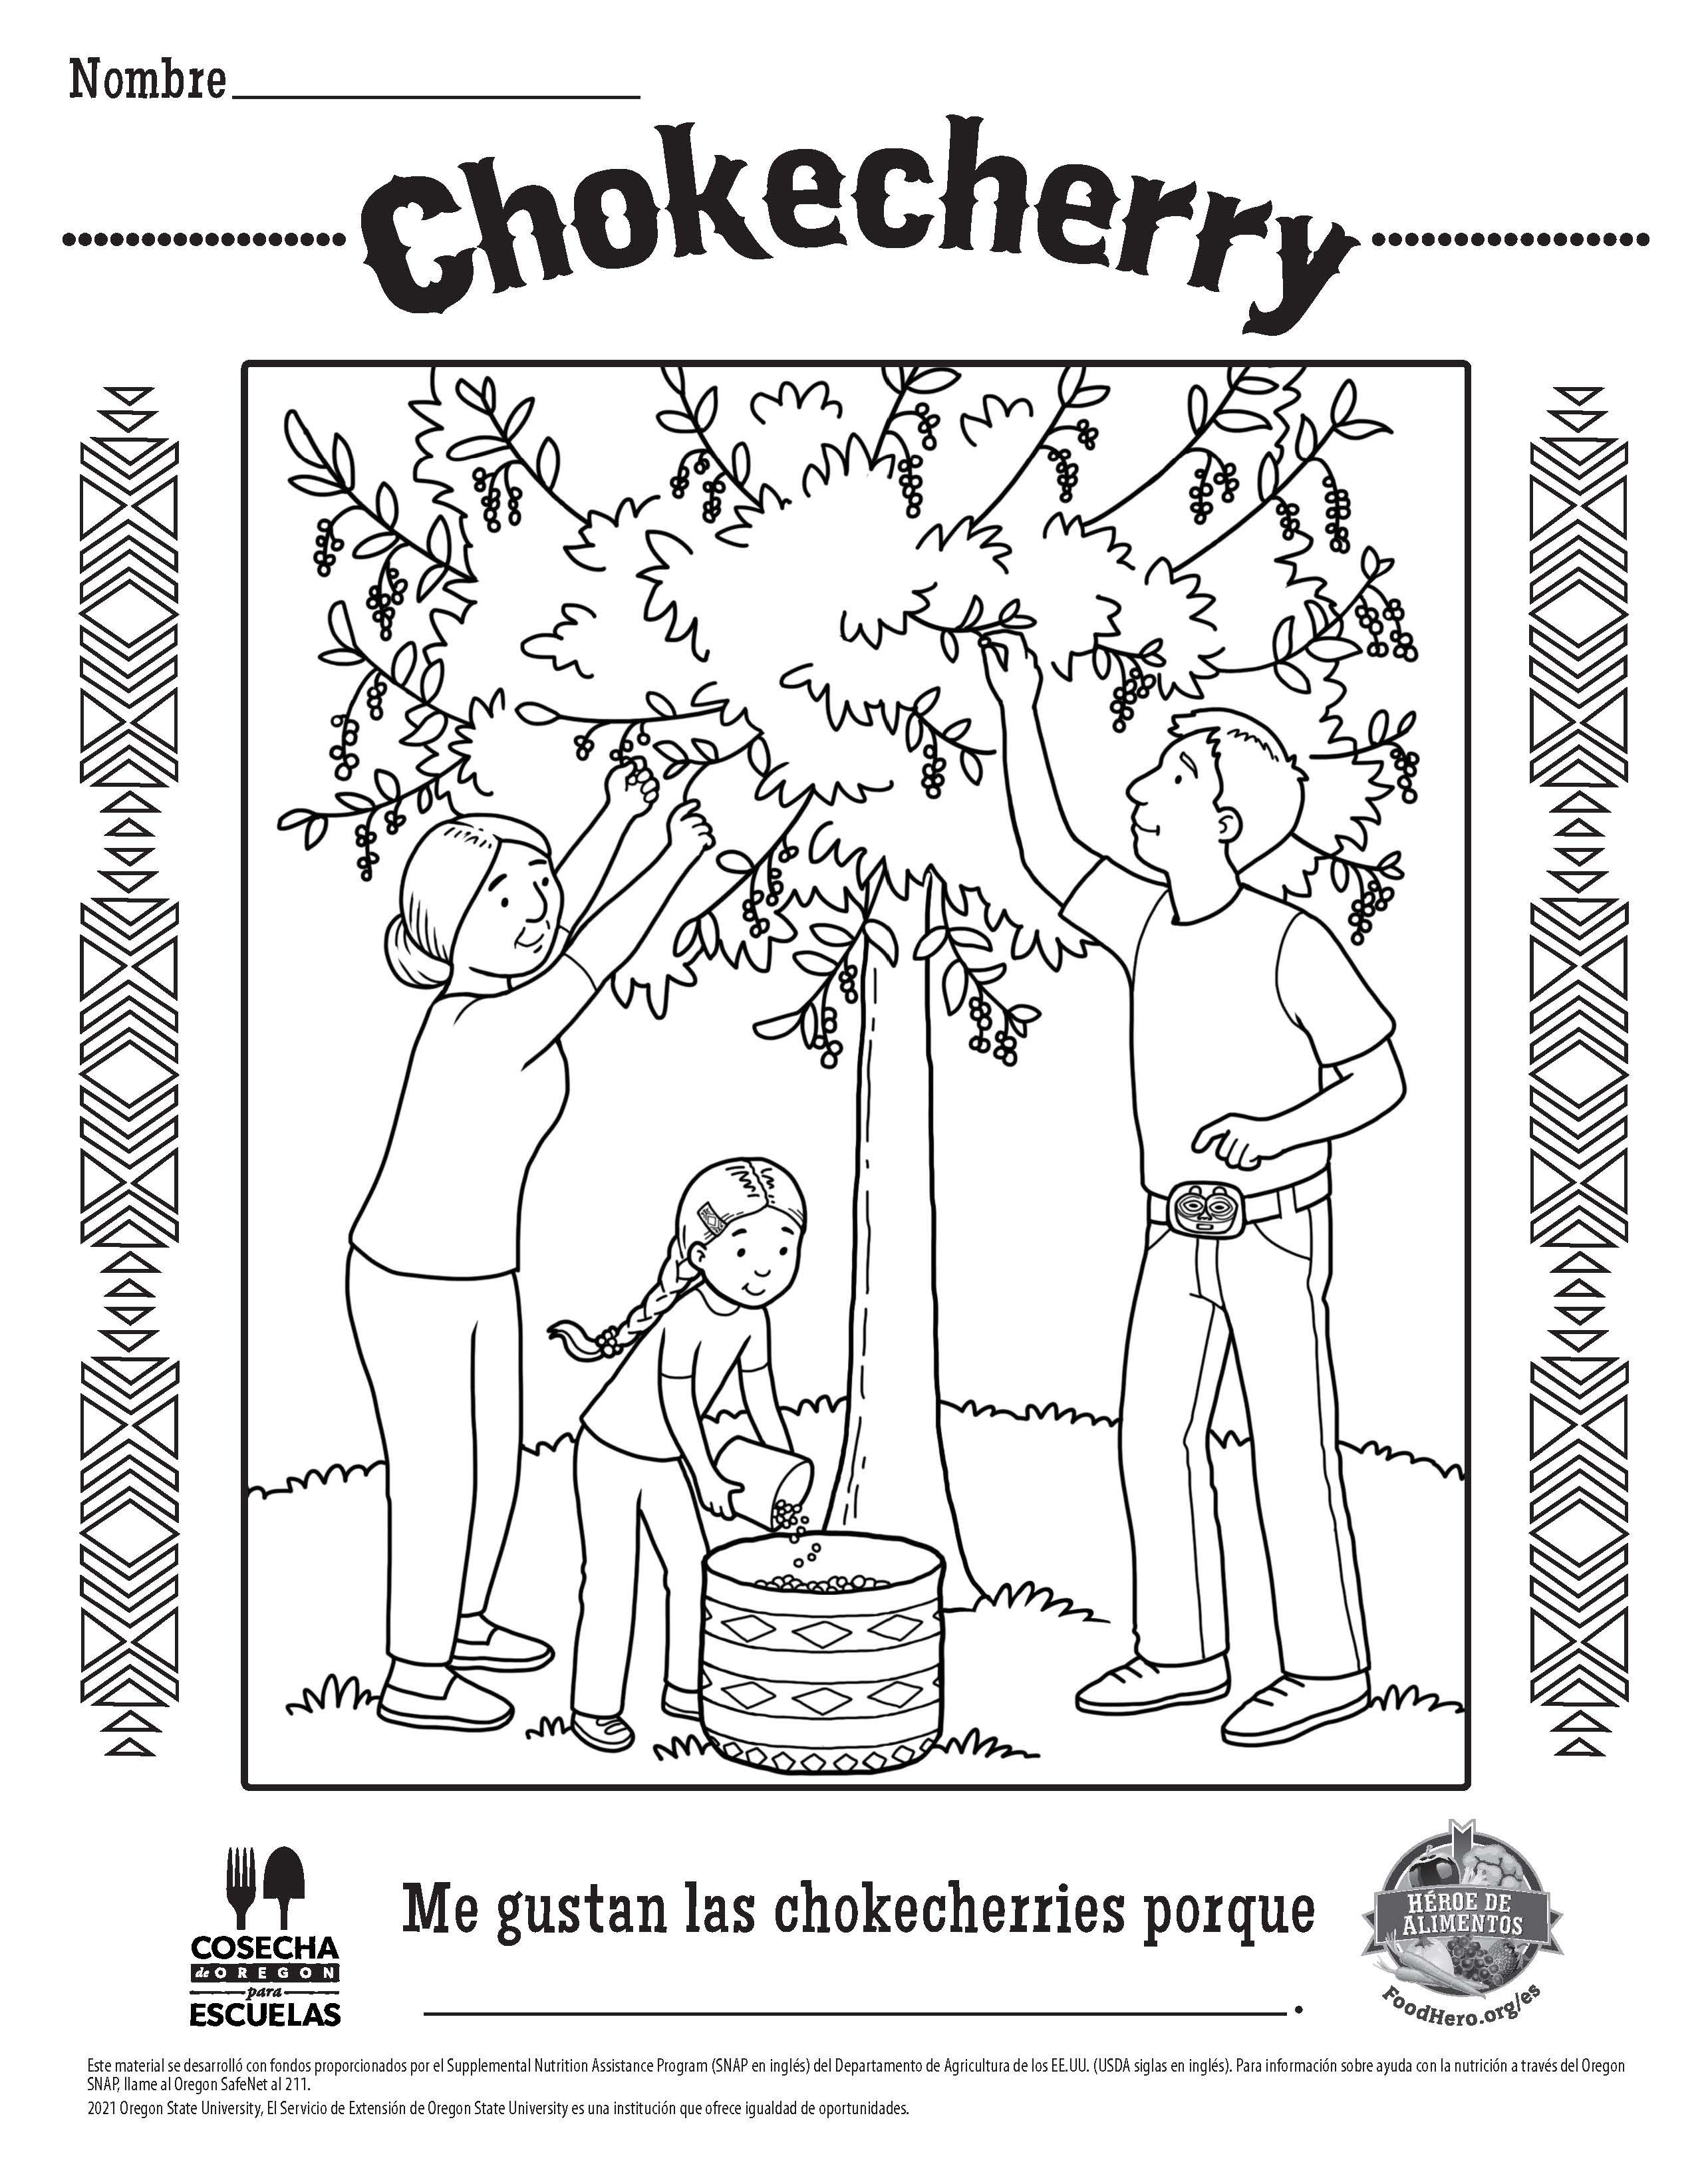 Chokecherry